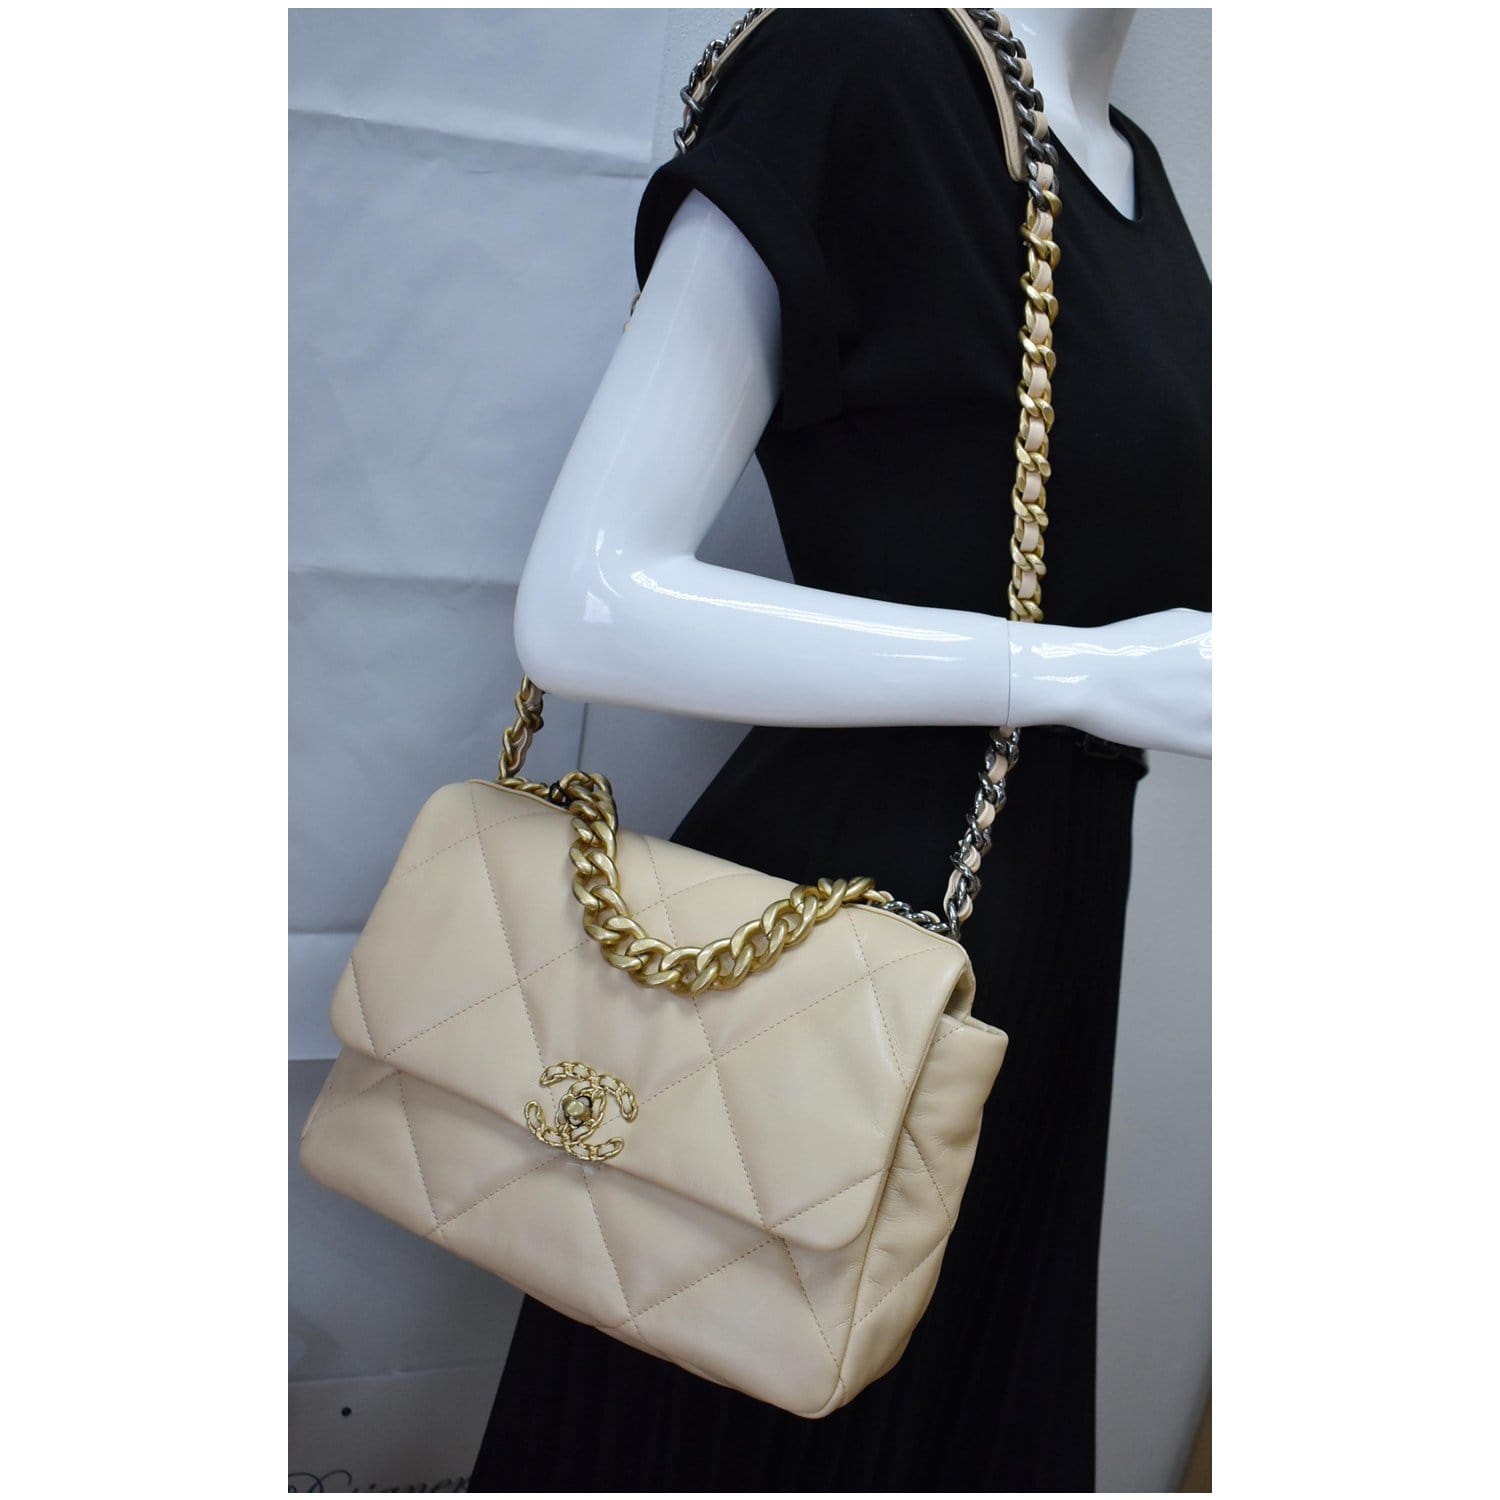 Chanel Chanel 19 Large Handbag